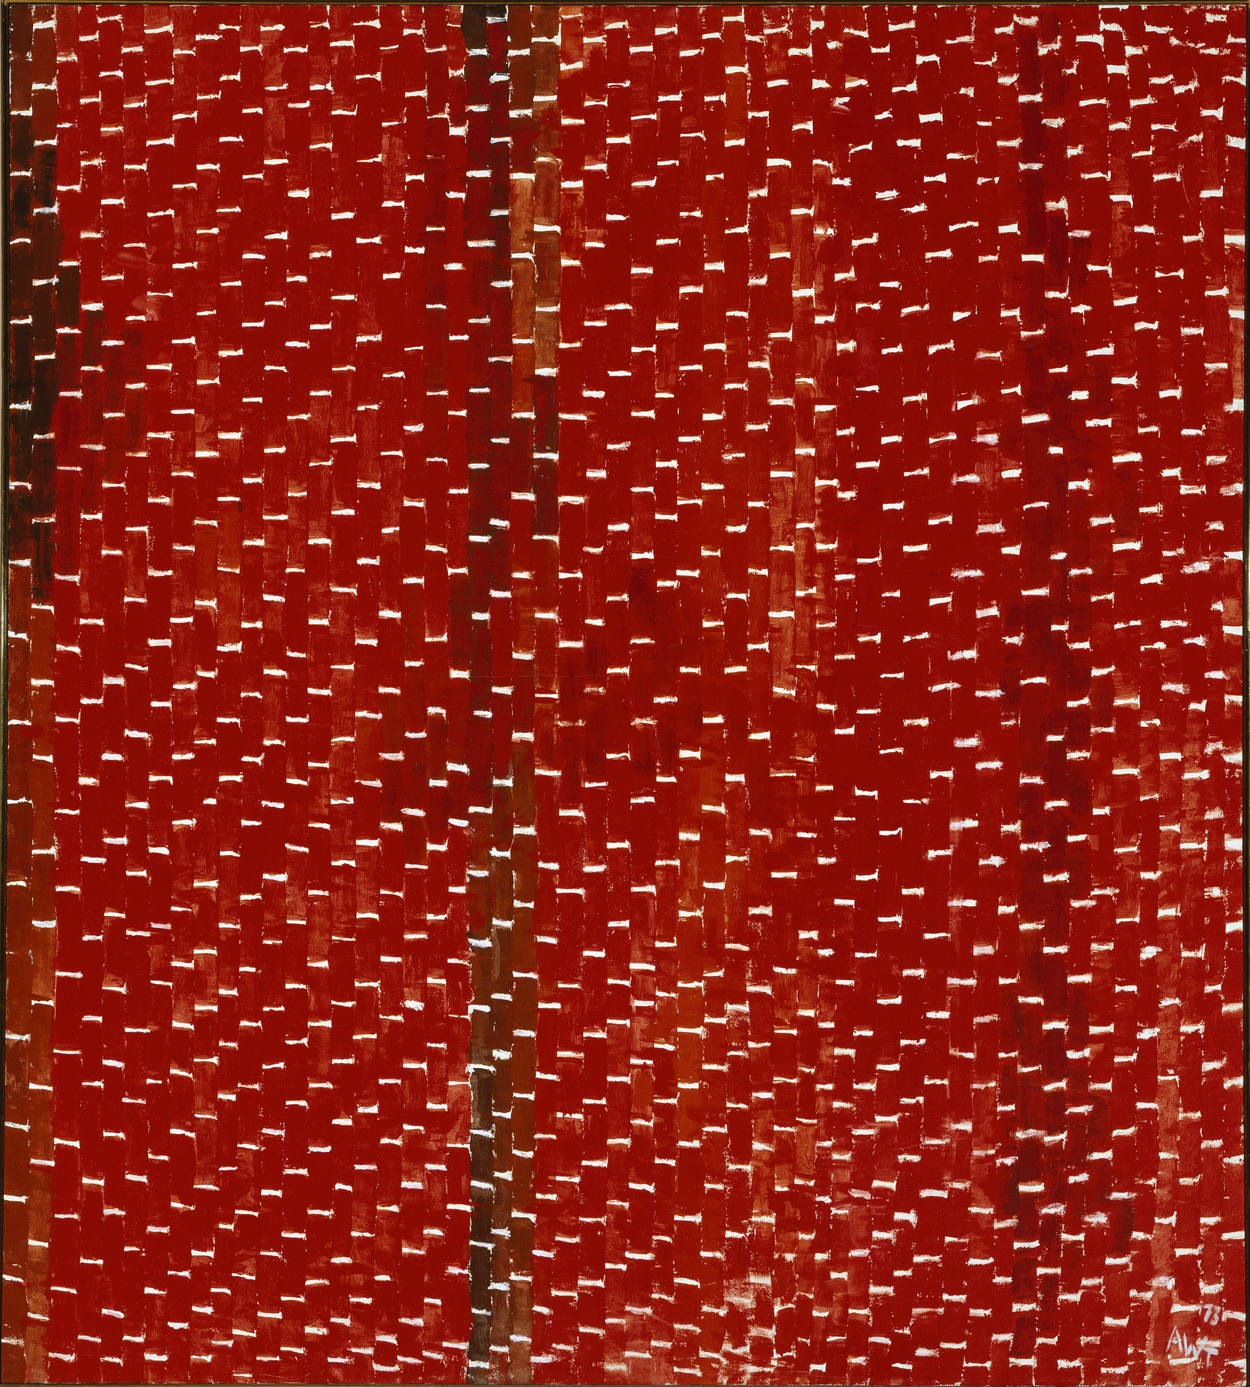 Orione by Alma Woodsey Thomas - 1973 - 151,76 x 137,16 cm 